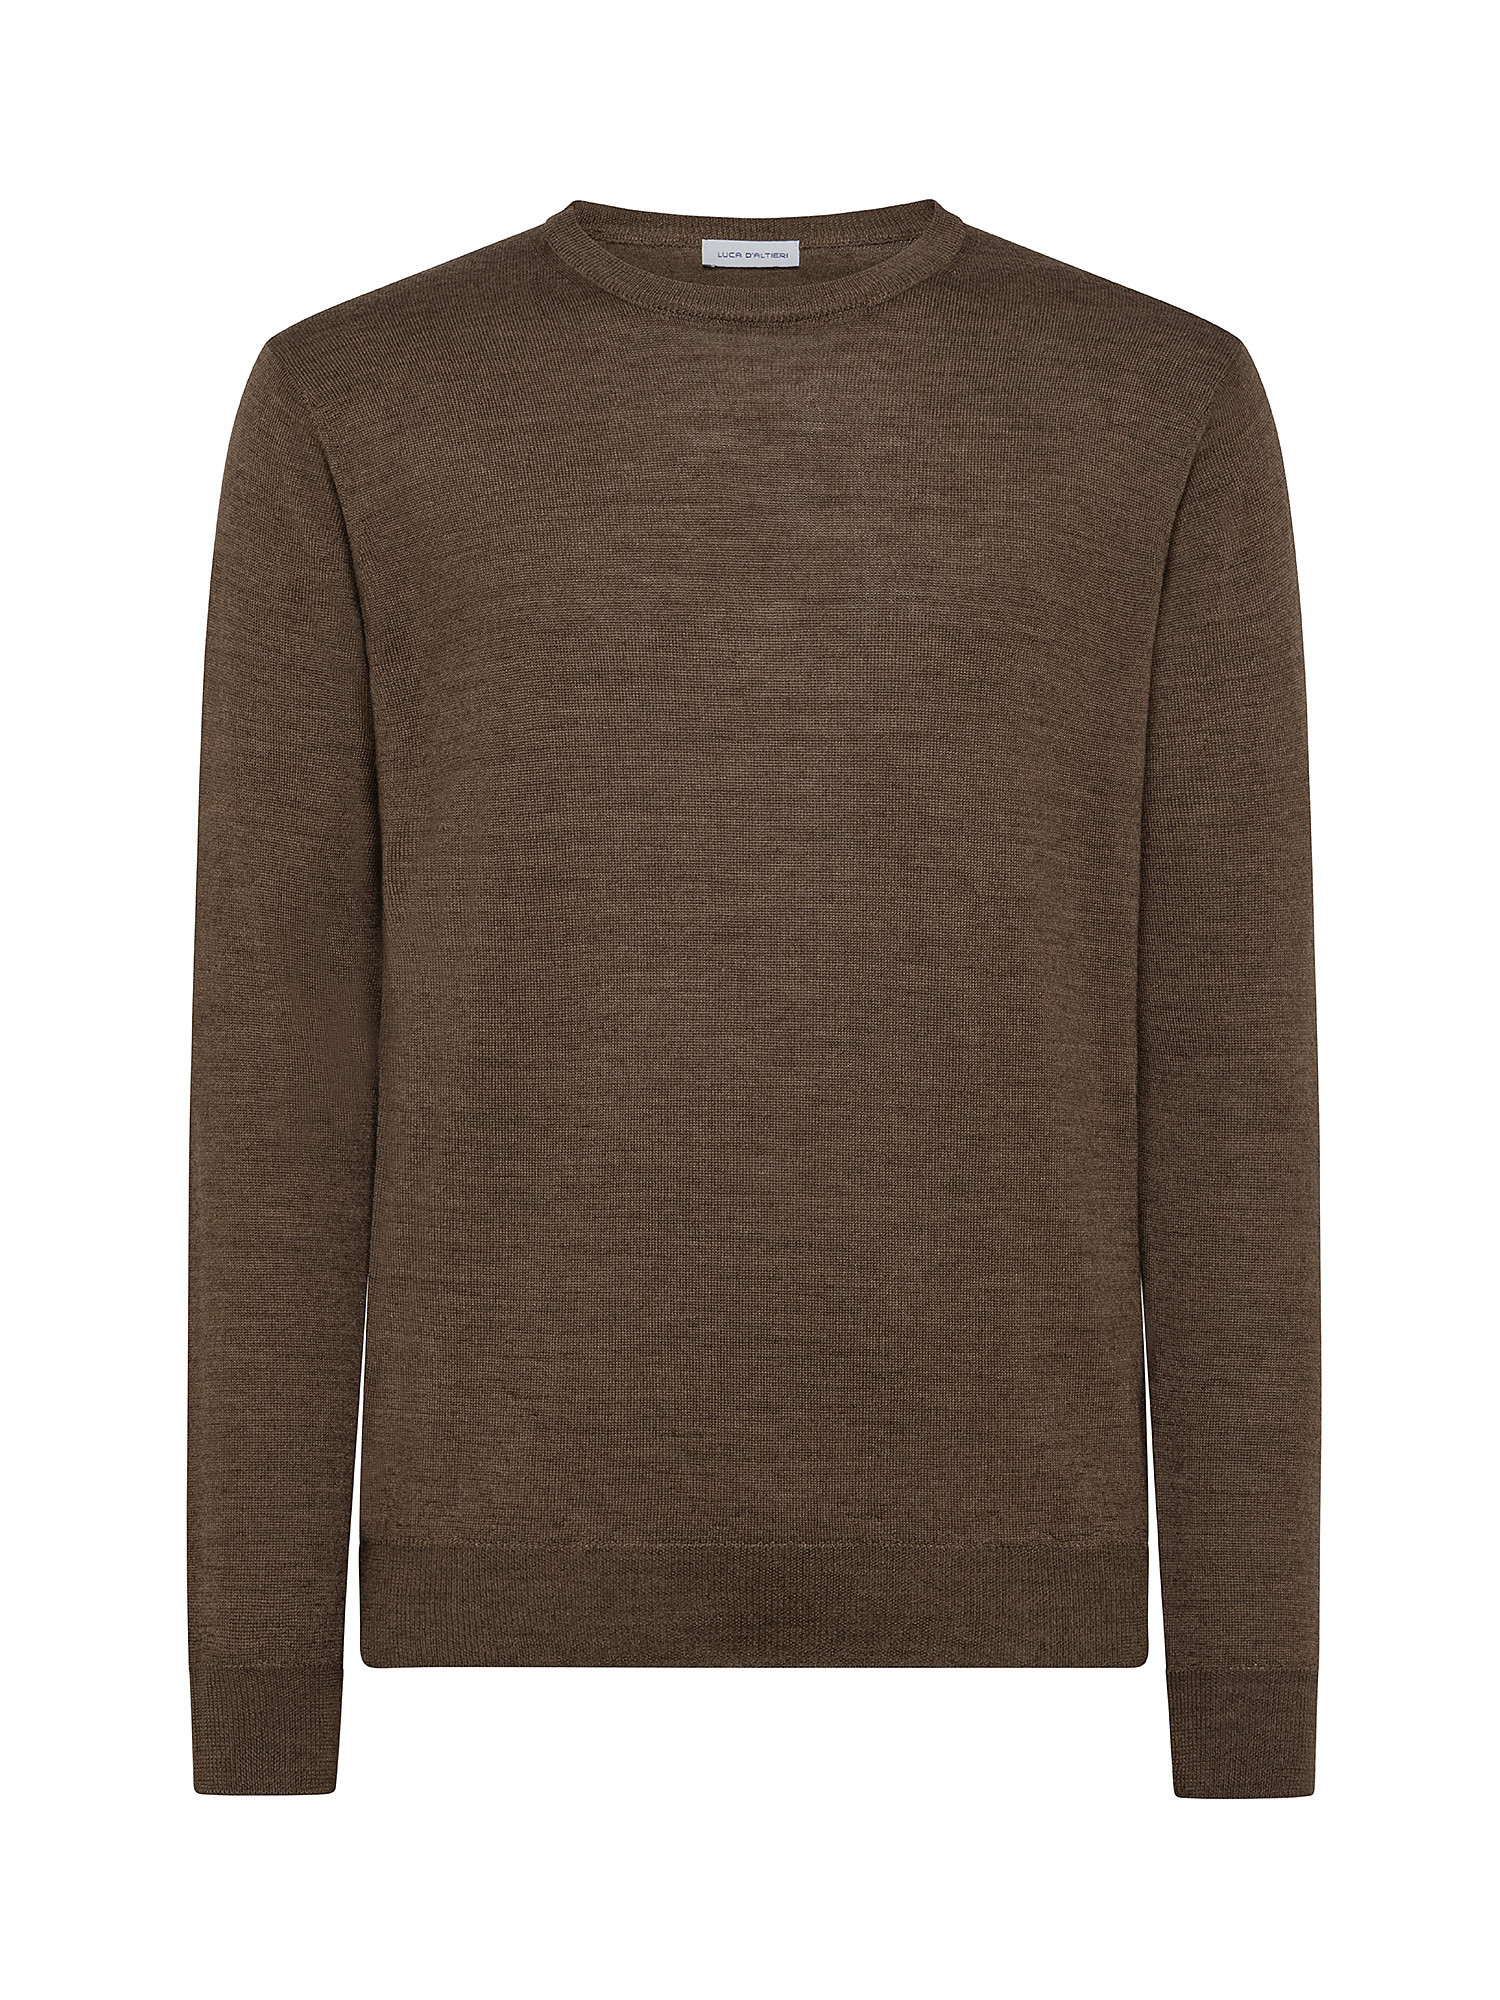 Merino Blend crewneck sweater - Machine washable, Hazelnut Brown, large image number 0